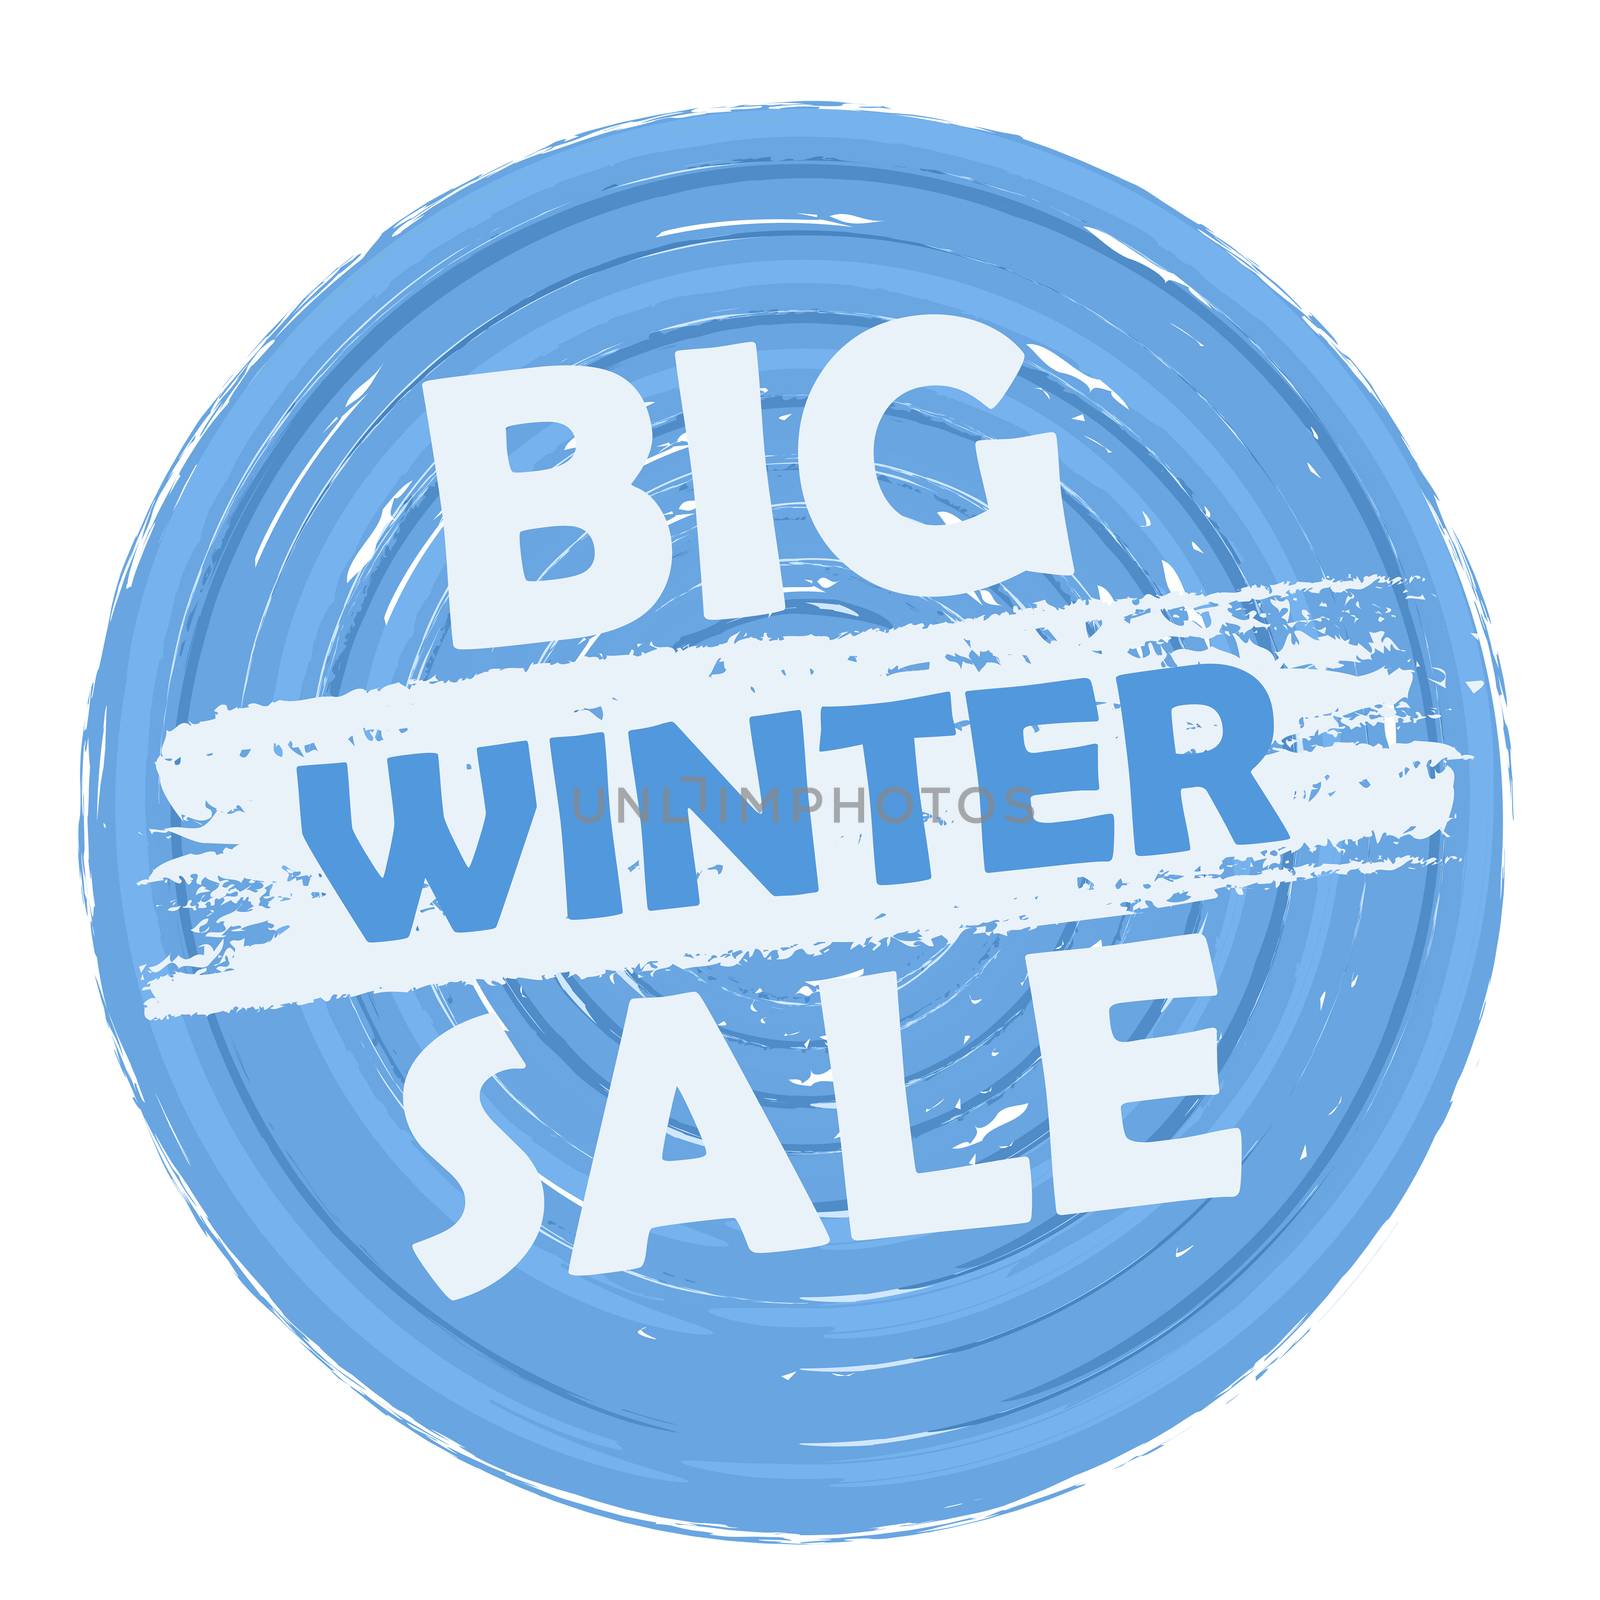 big winter sale by marinini